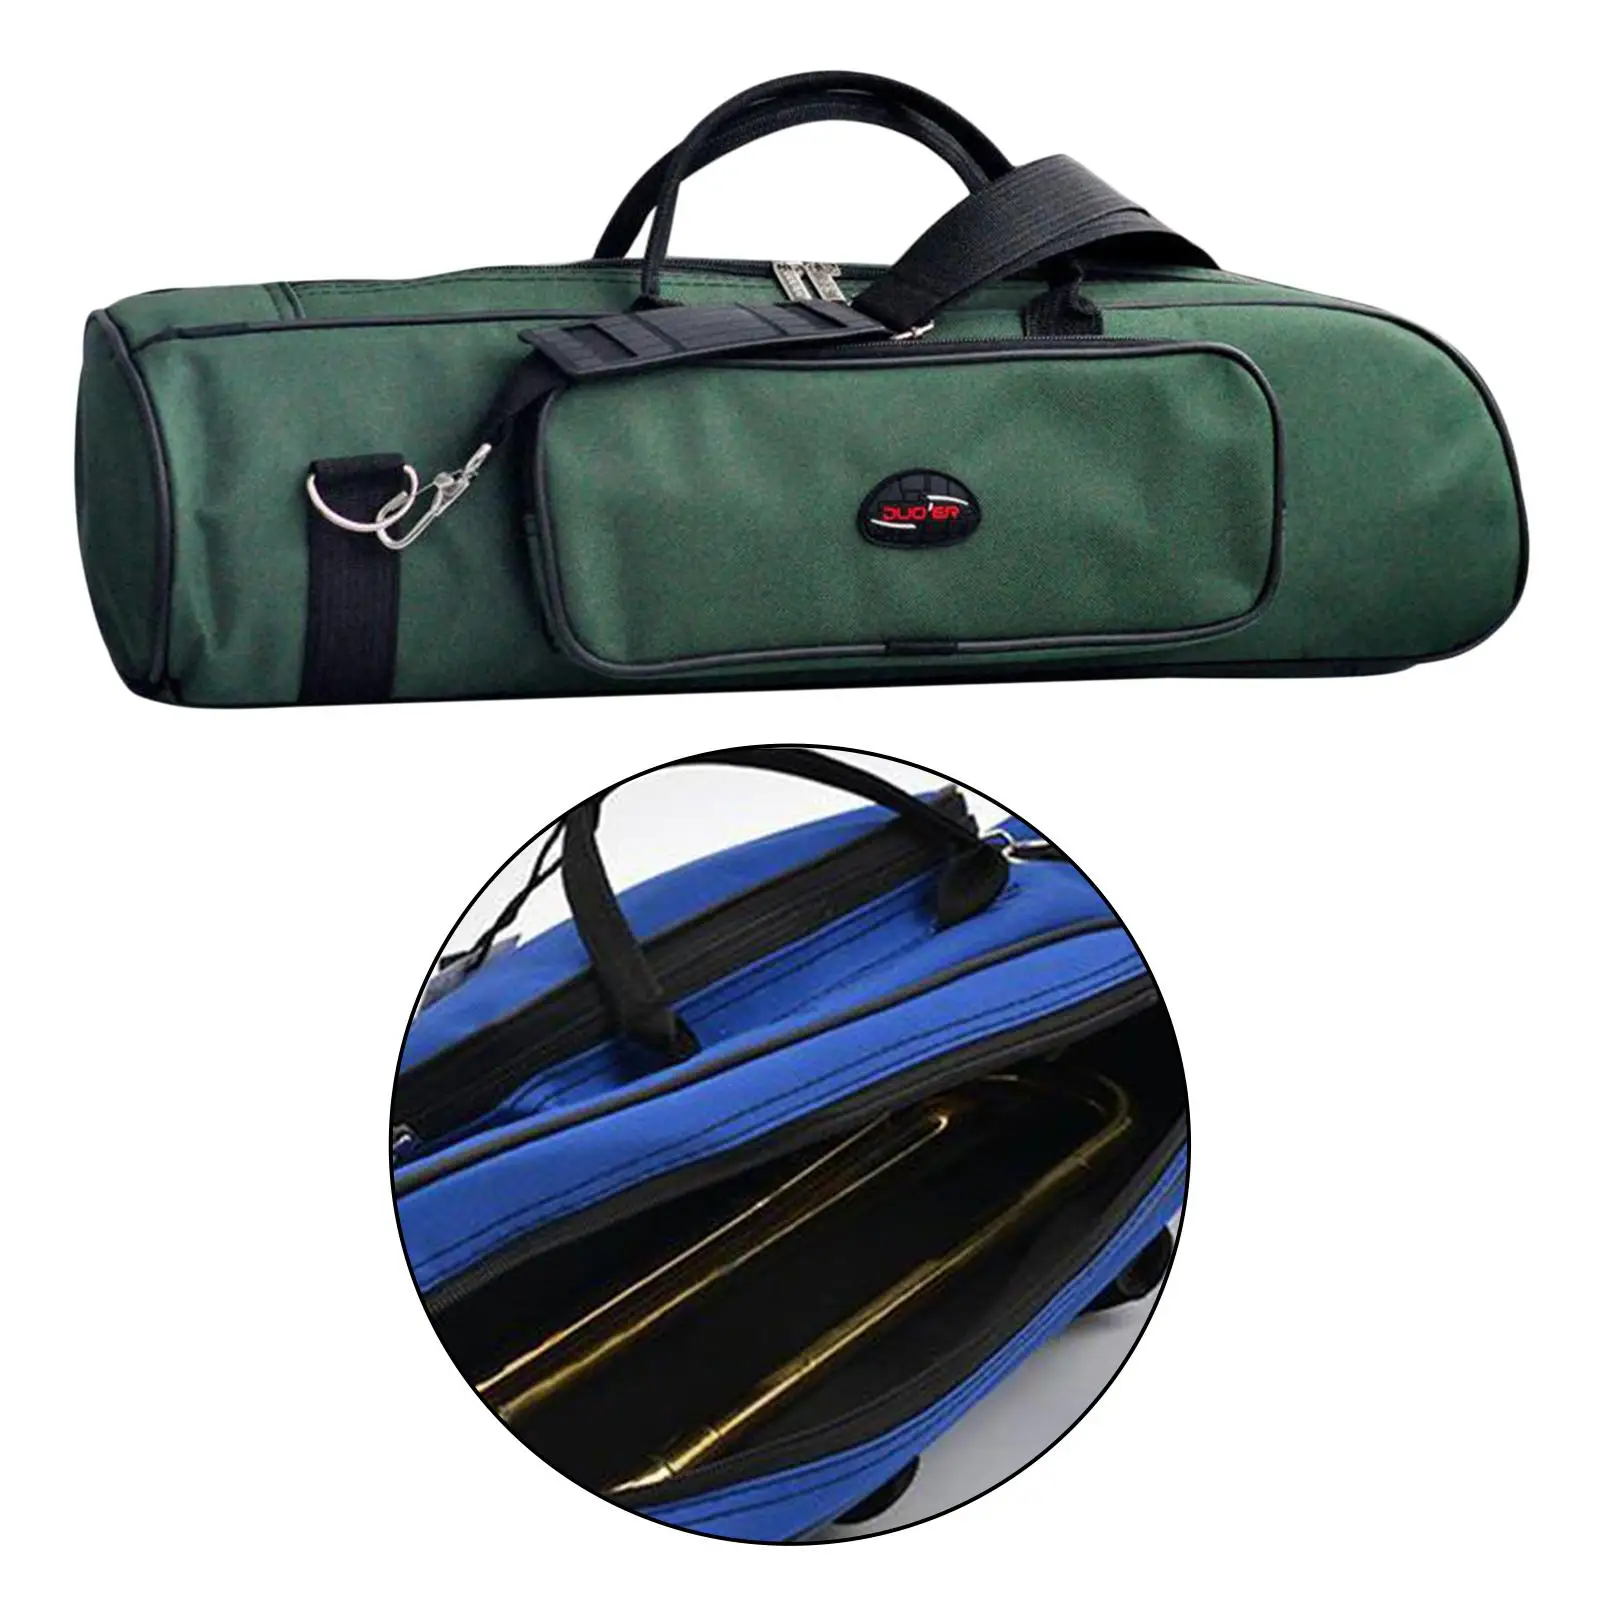 Travel Concert Trumpet Carrying Case Oxford Padded Shoulder Strap Bags